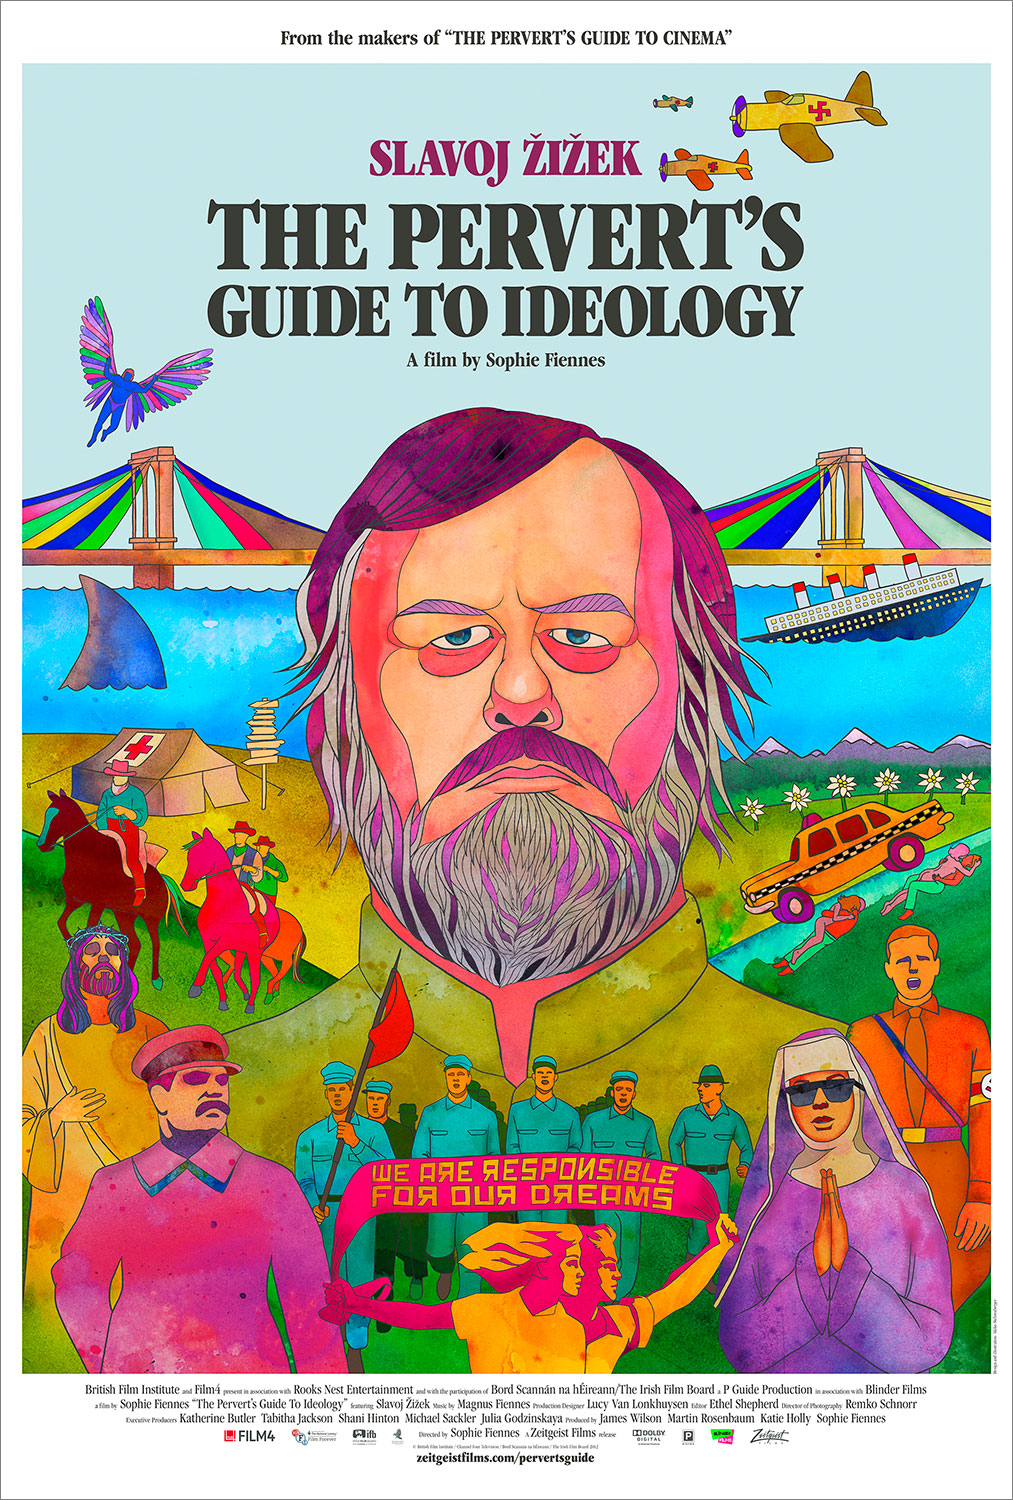 Slavoj Zizek in The Pervert's Guide to Ideology (2012)